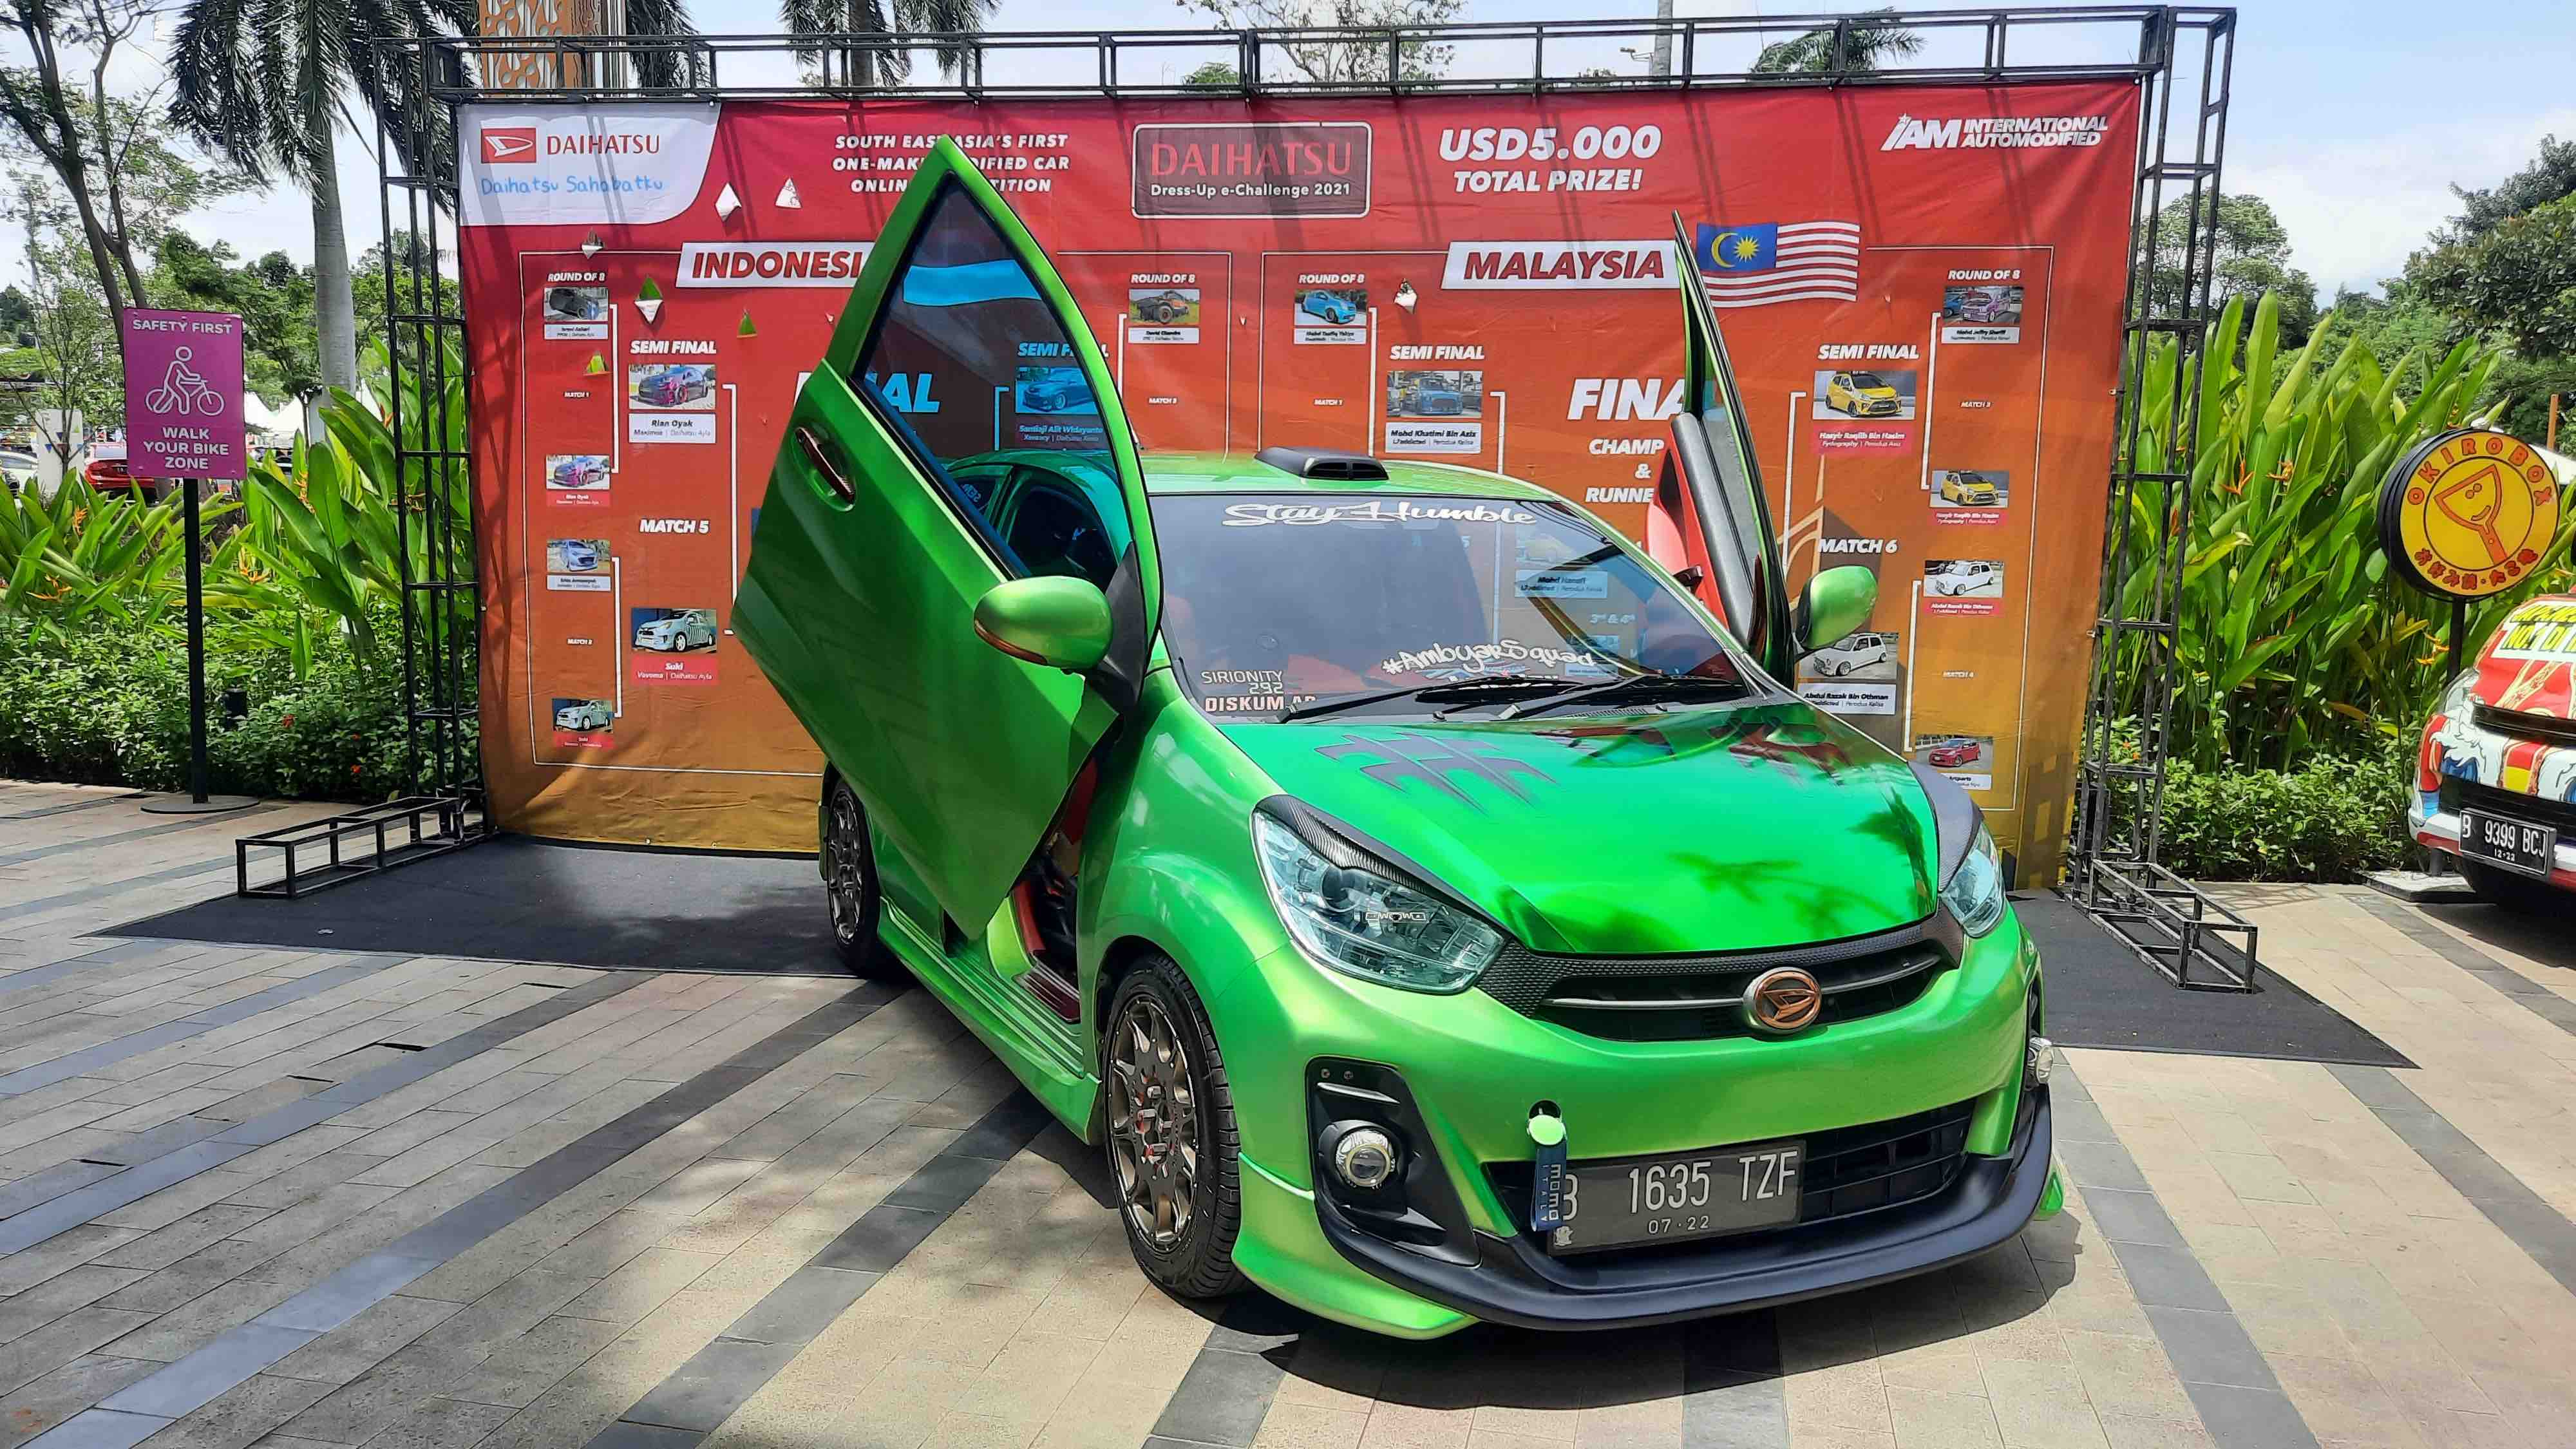 Modifikasi Mobil Daihatsu Indonesia Merambah Hingga Ke Malaysia Kabarminangid